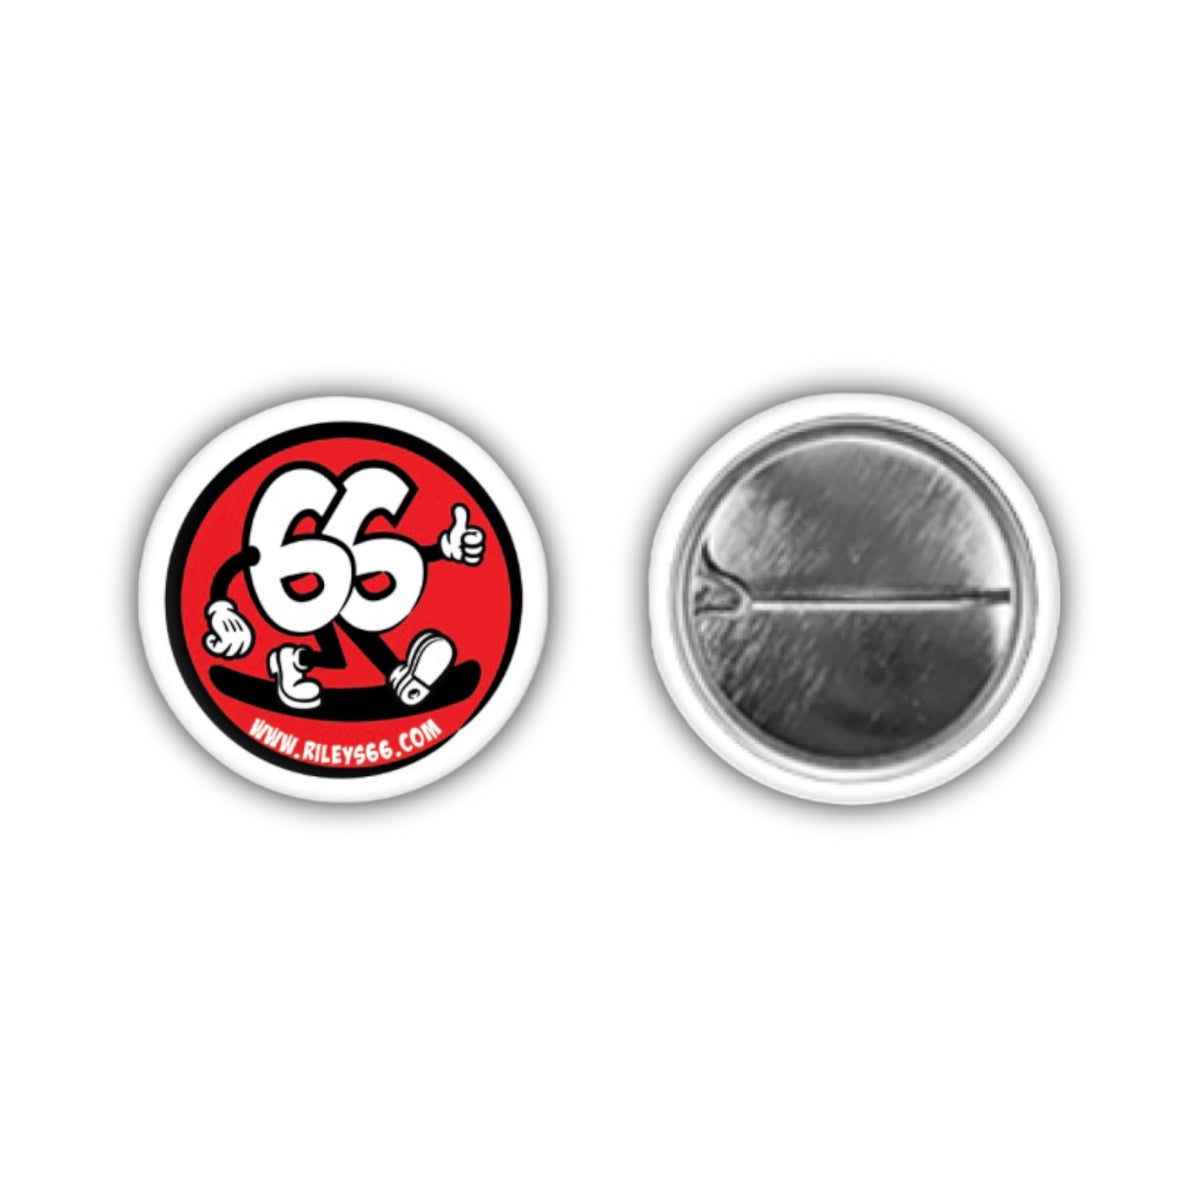 Riley&#39;s 66 Walking 66 Logo Button